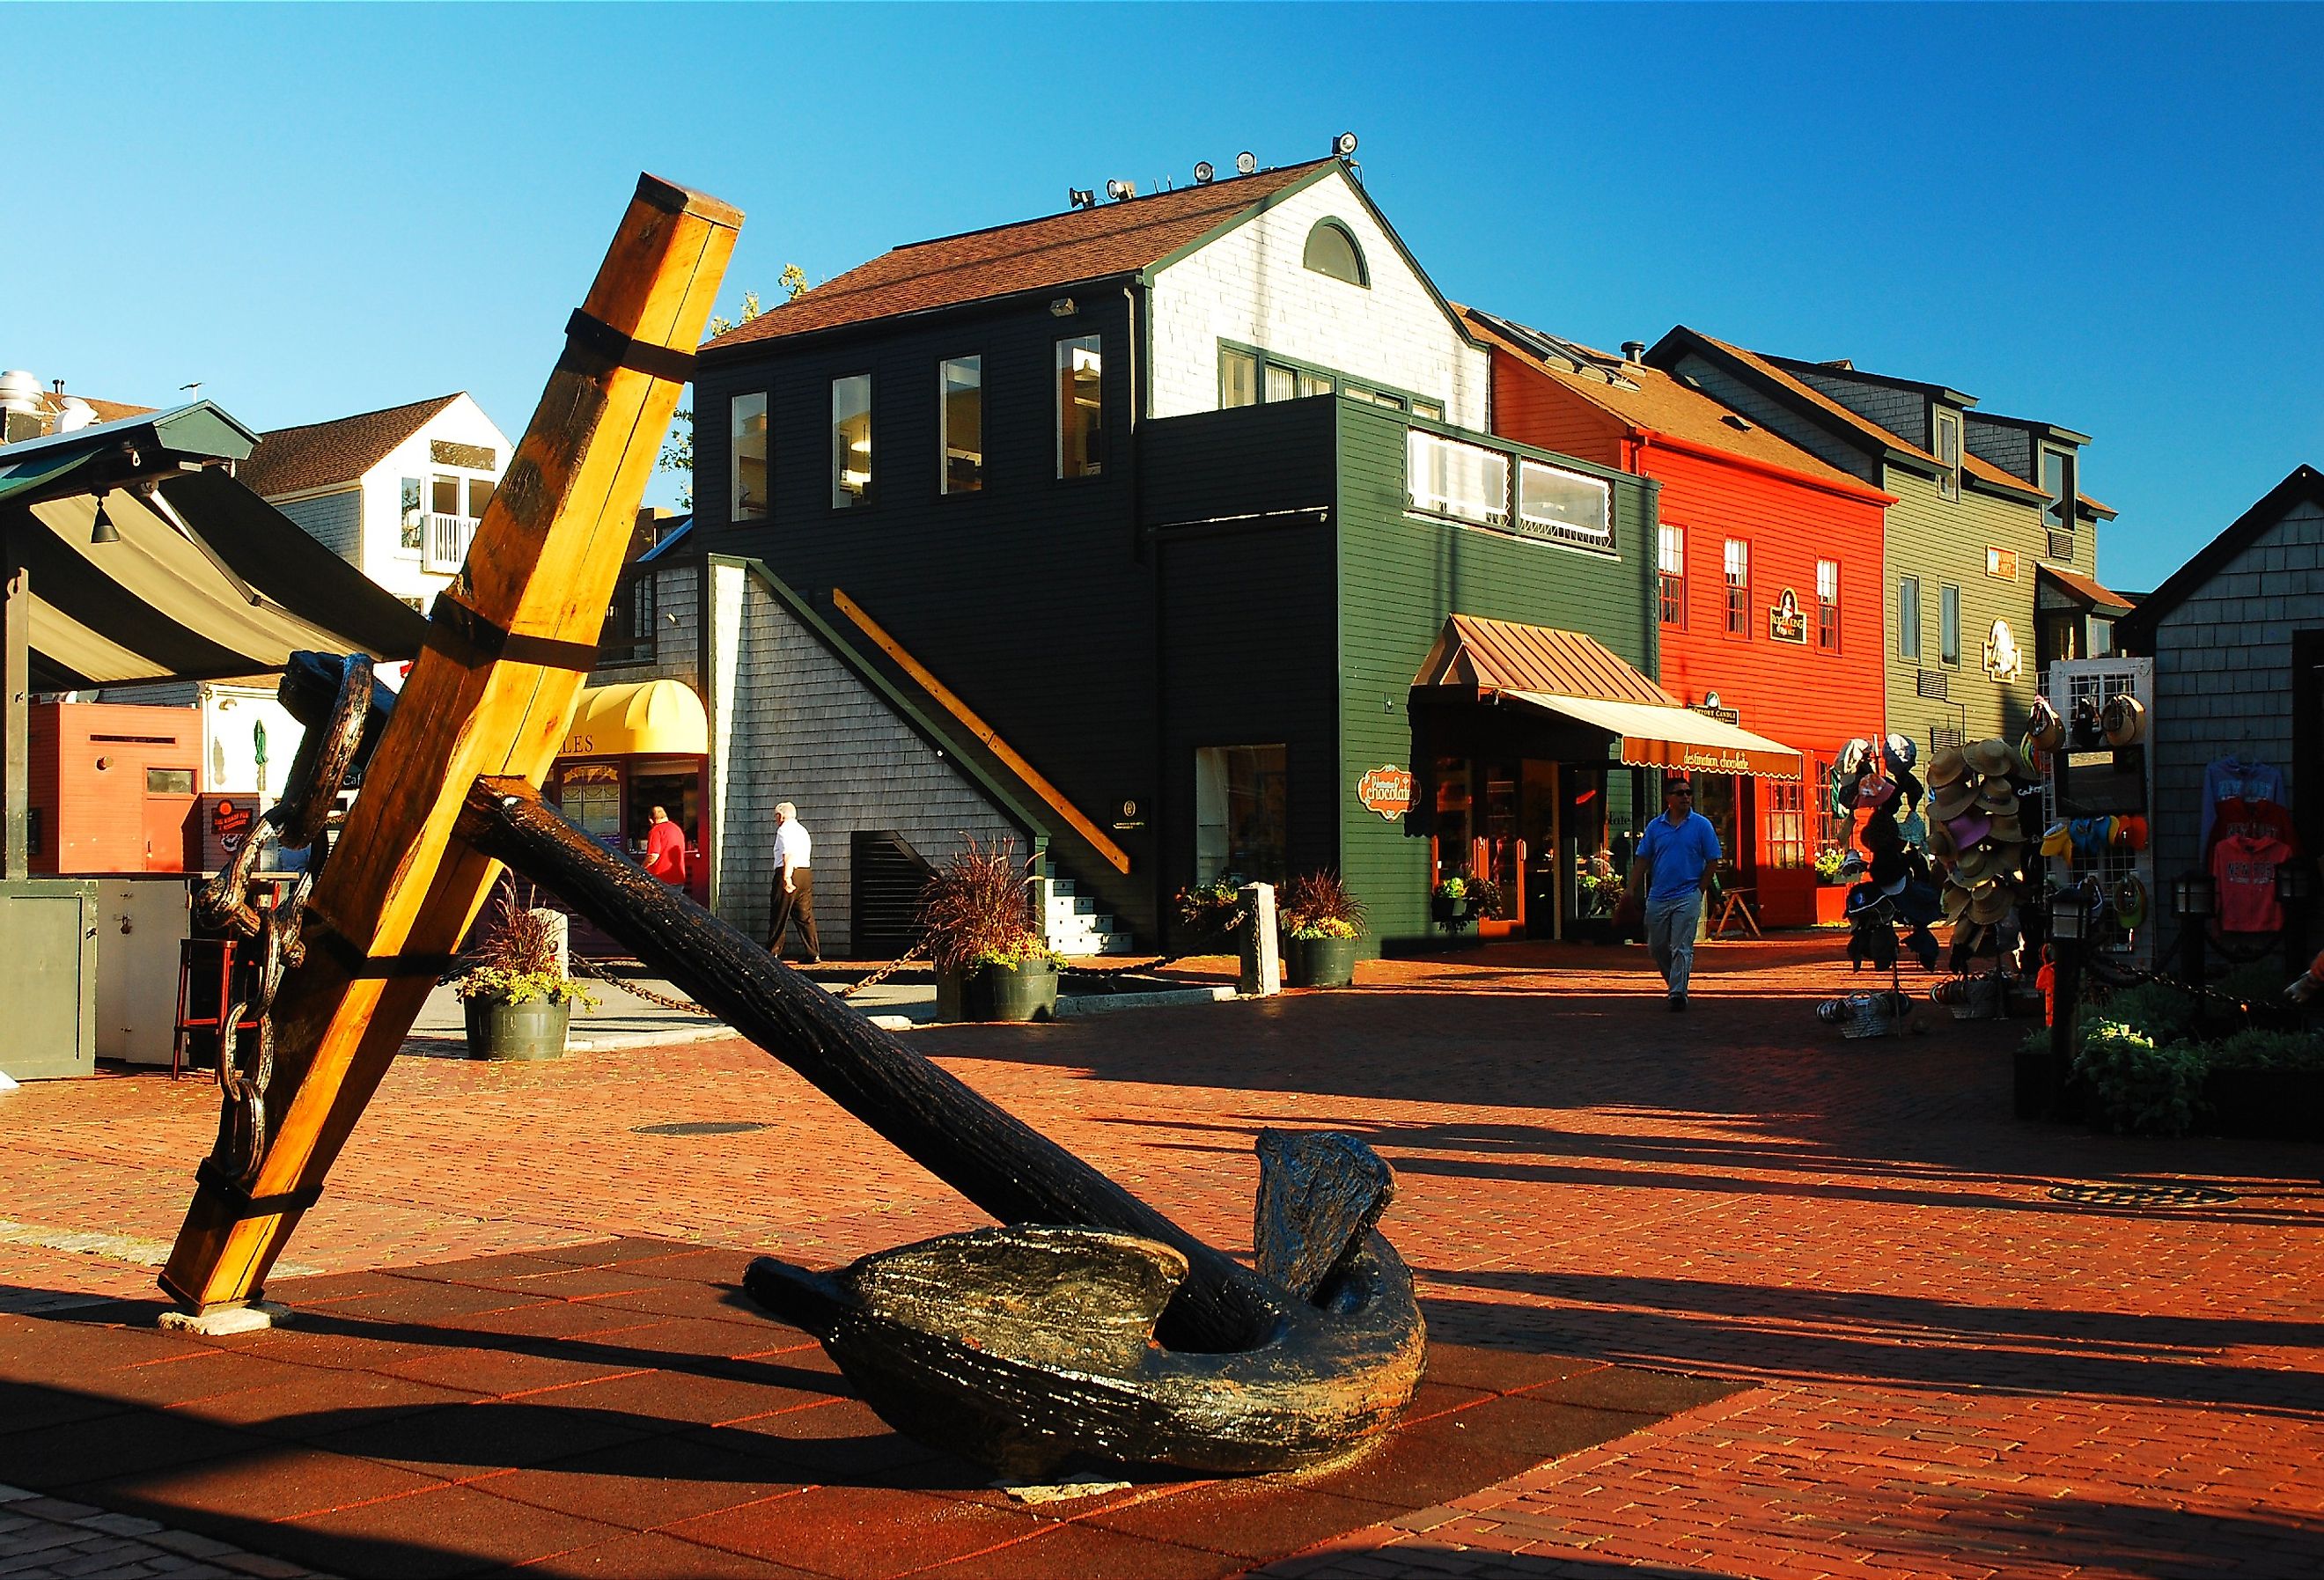 The historic anchor at Bowens' Wharf, in Newport, Rhode Island. Image credit James Kirkikis via Shutterstock